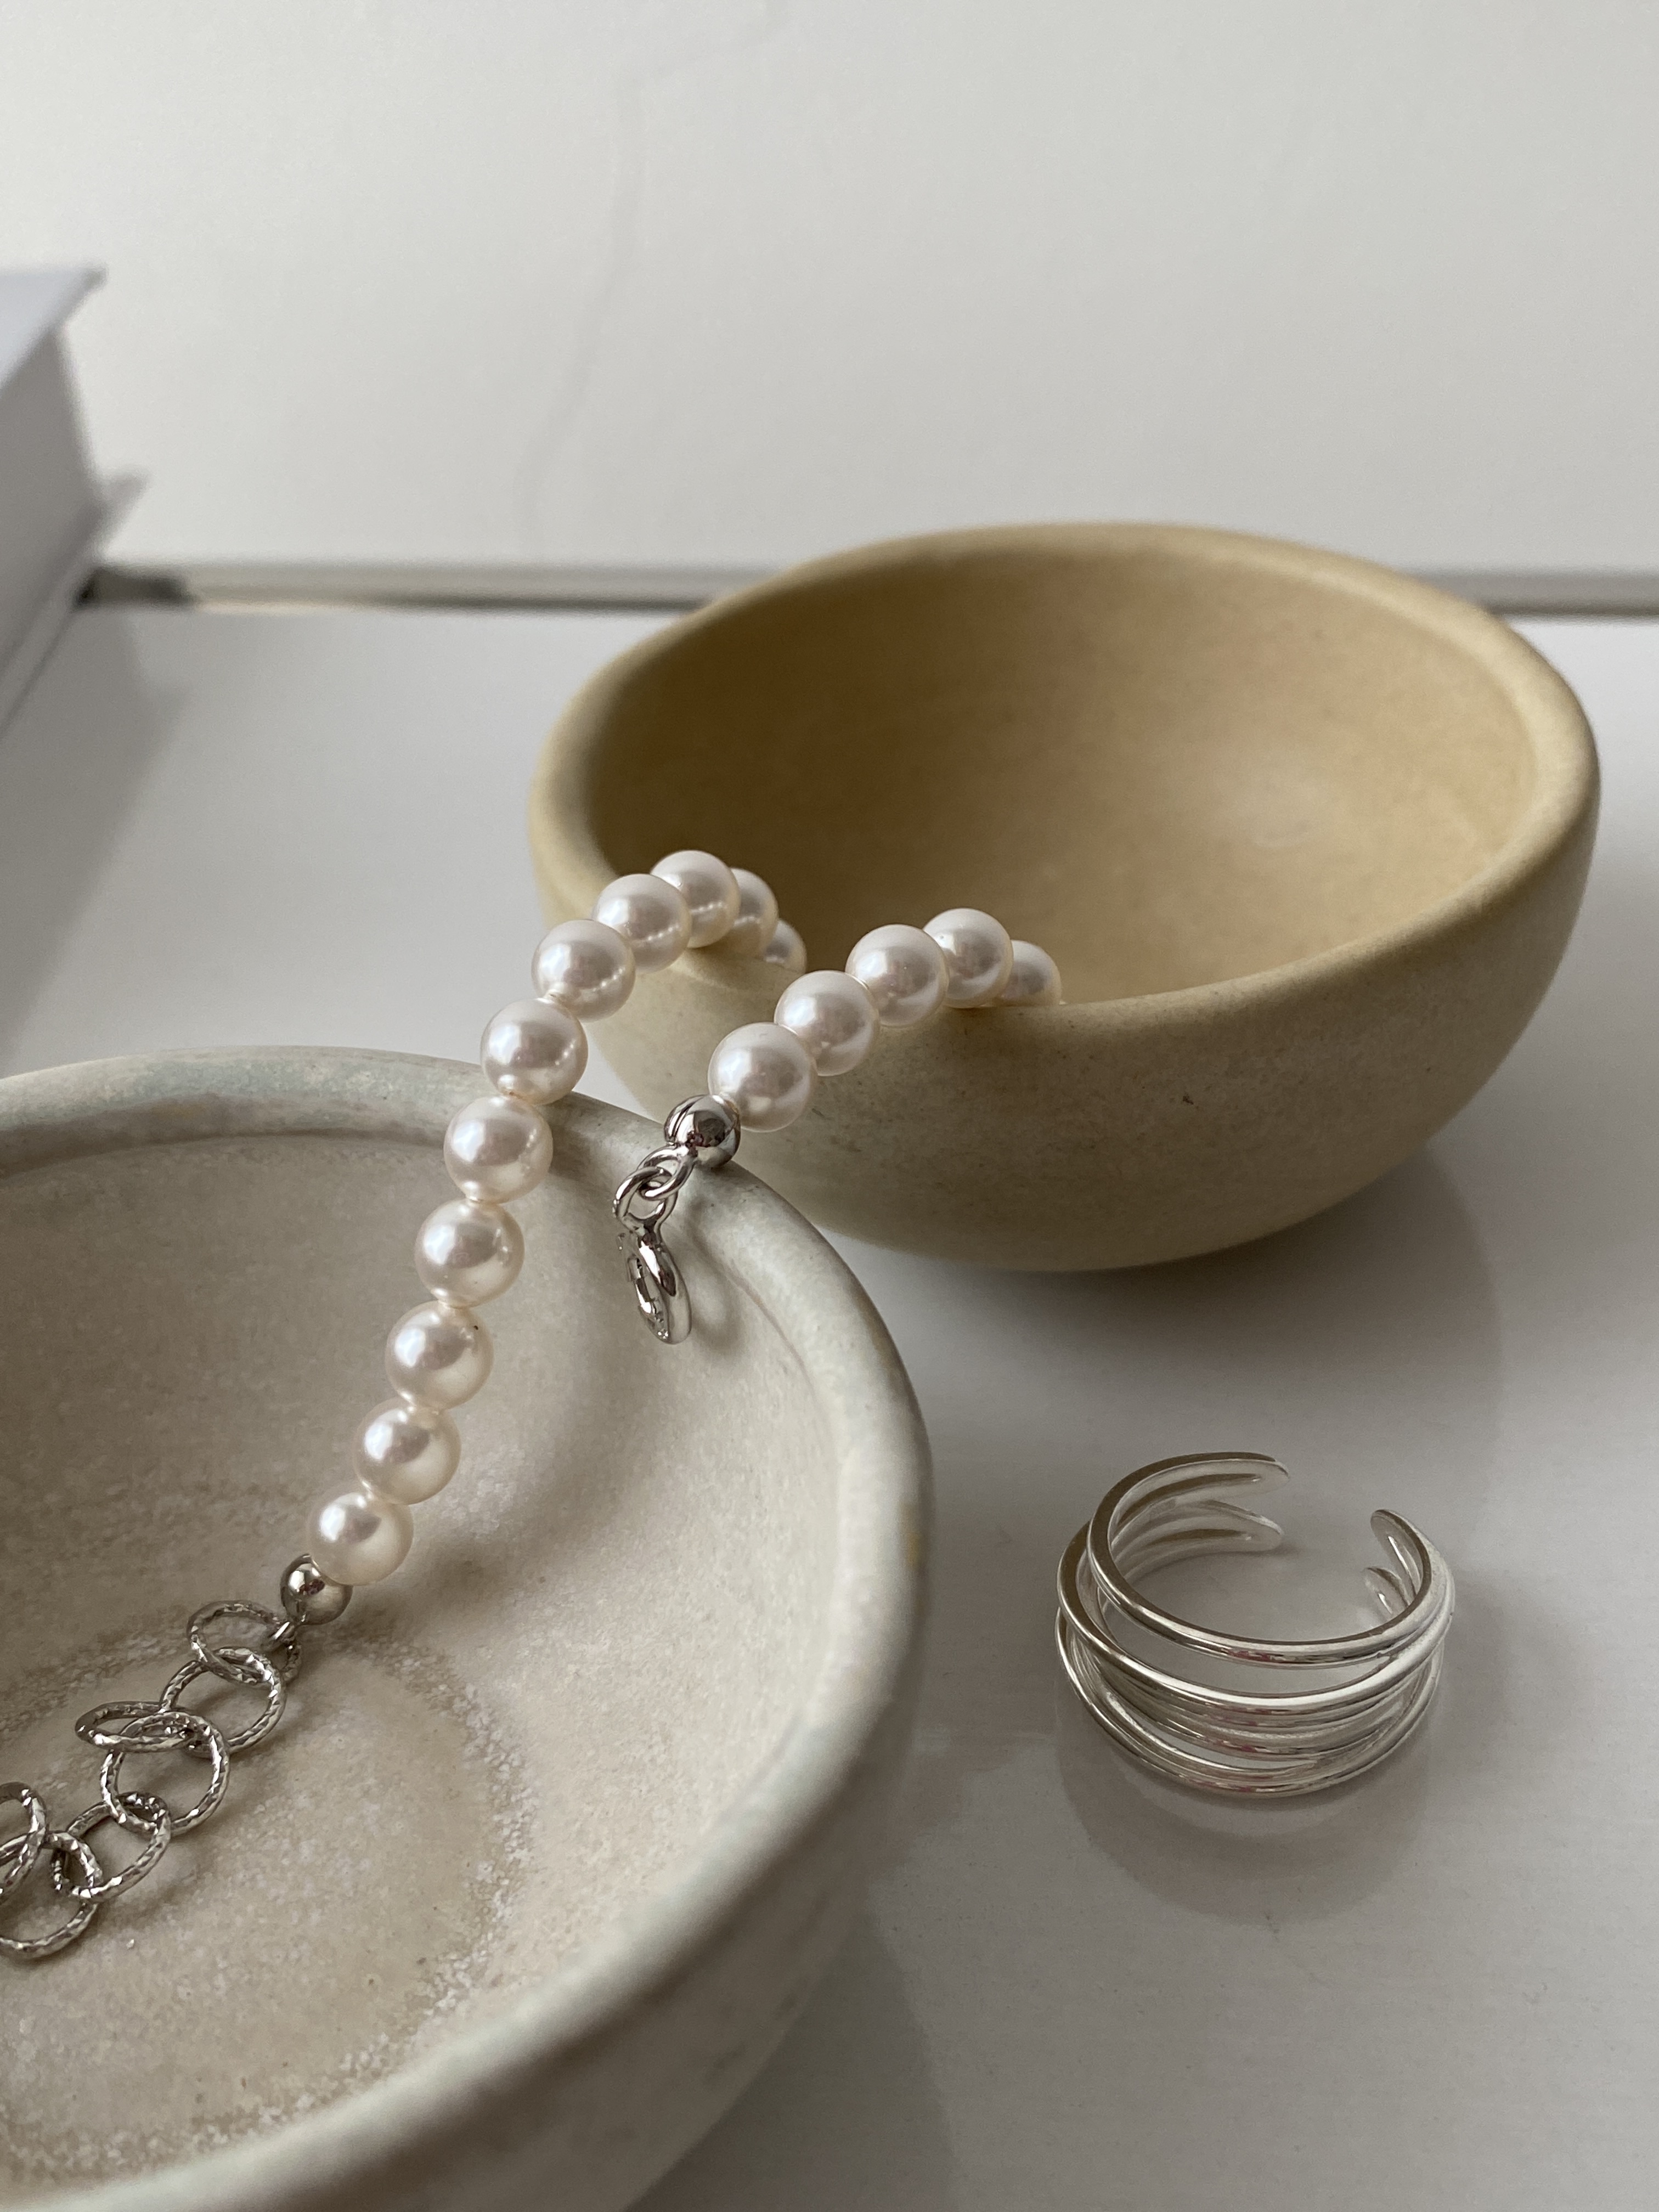 5mm freshwater pearl bracelet